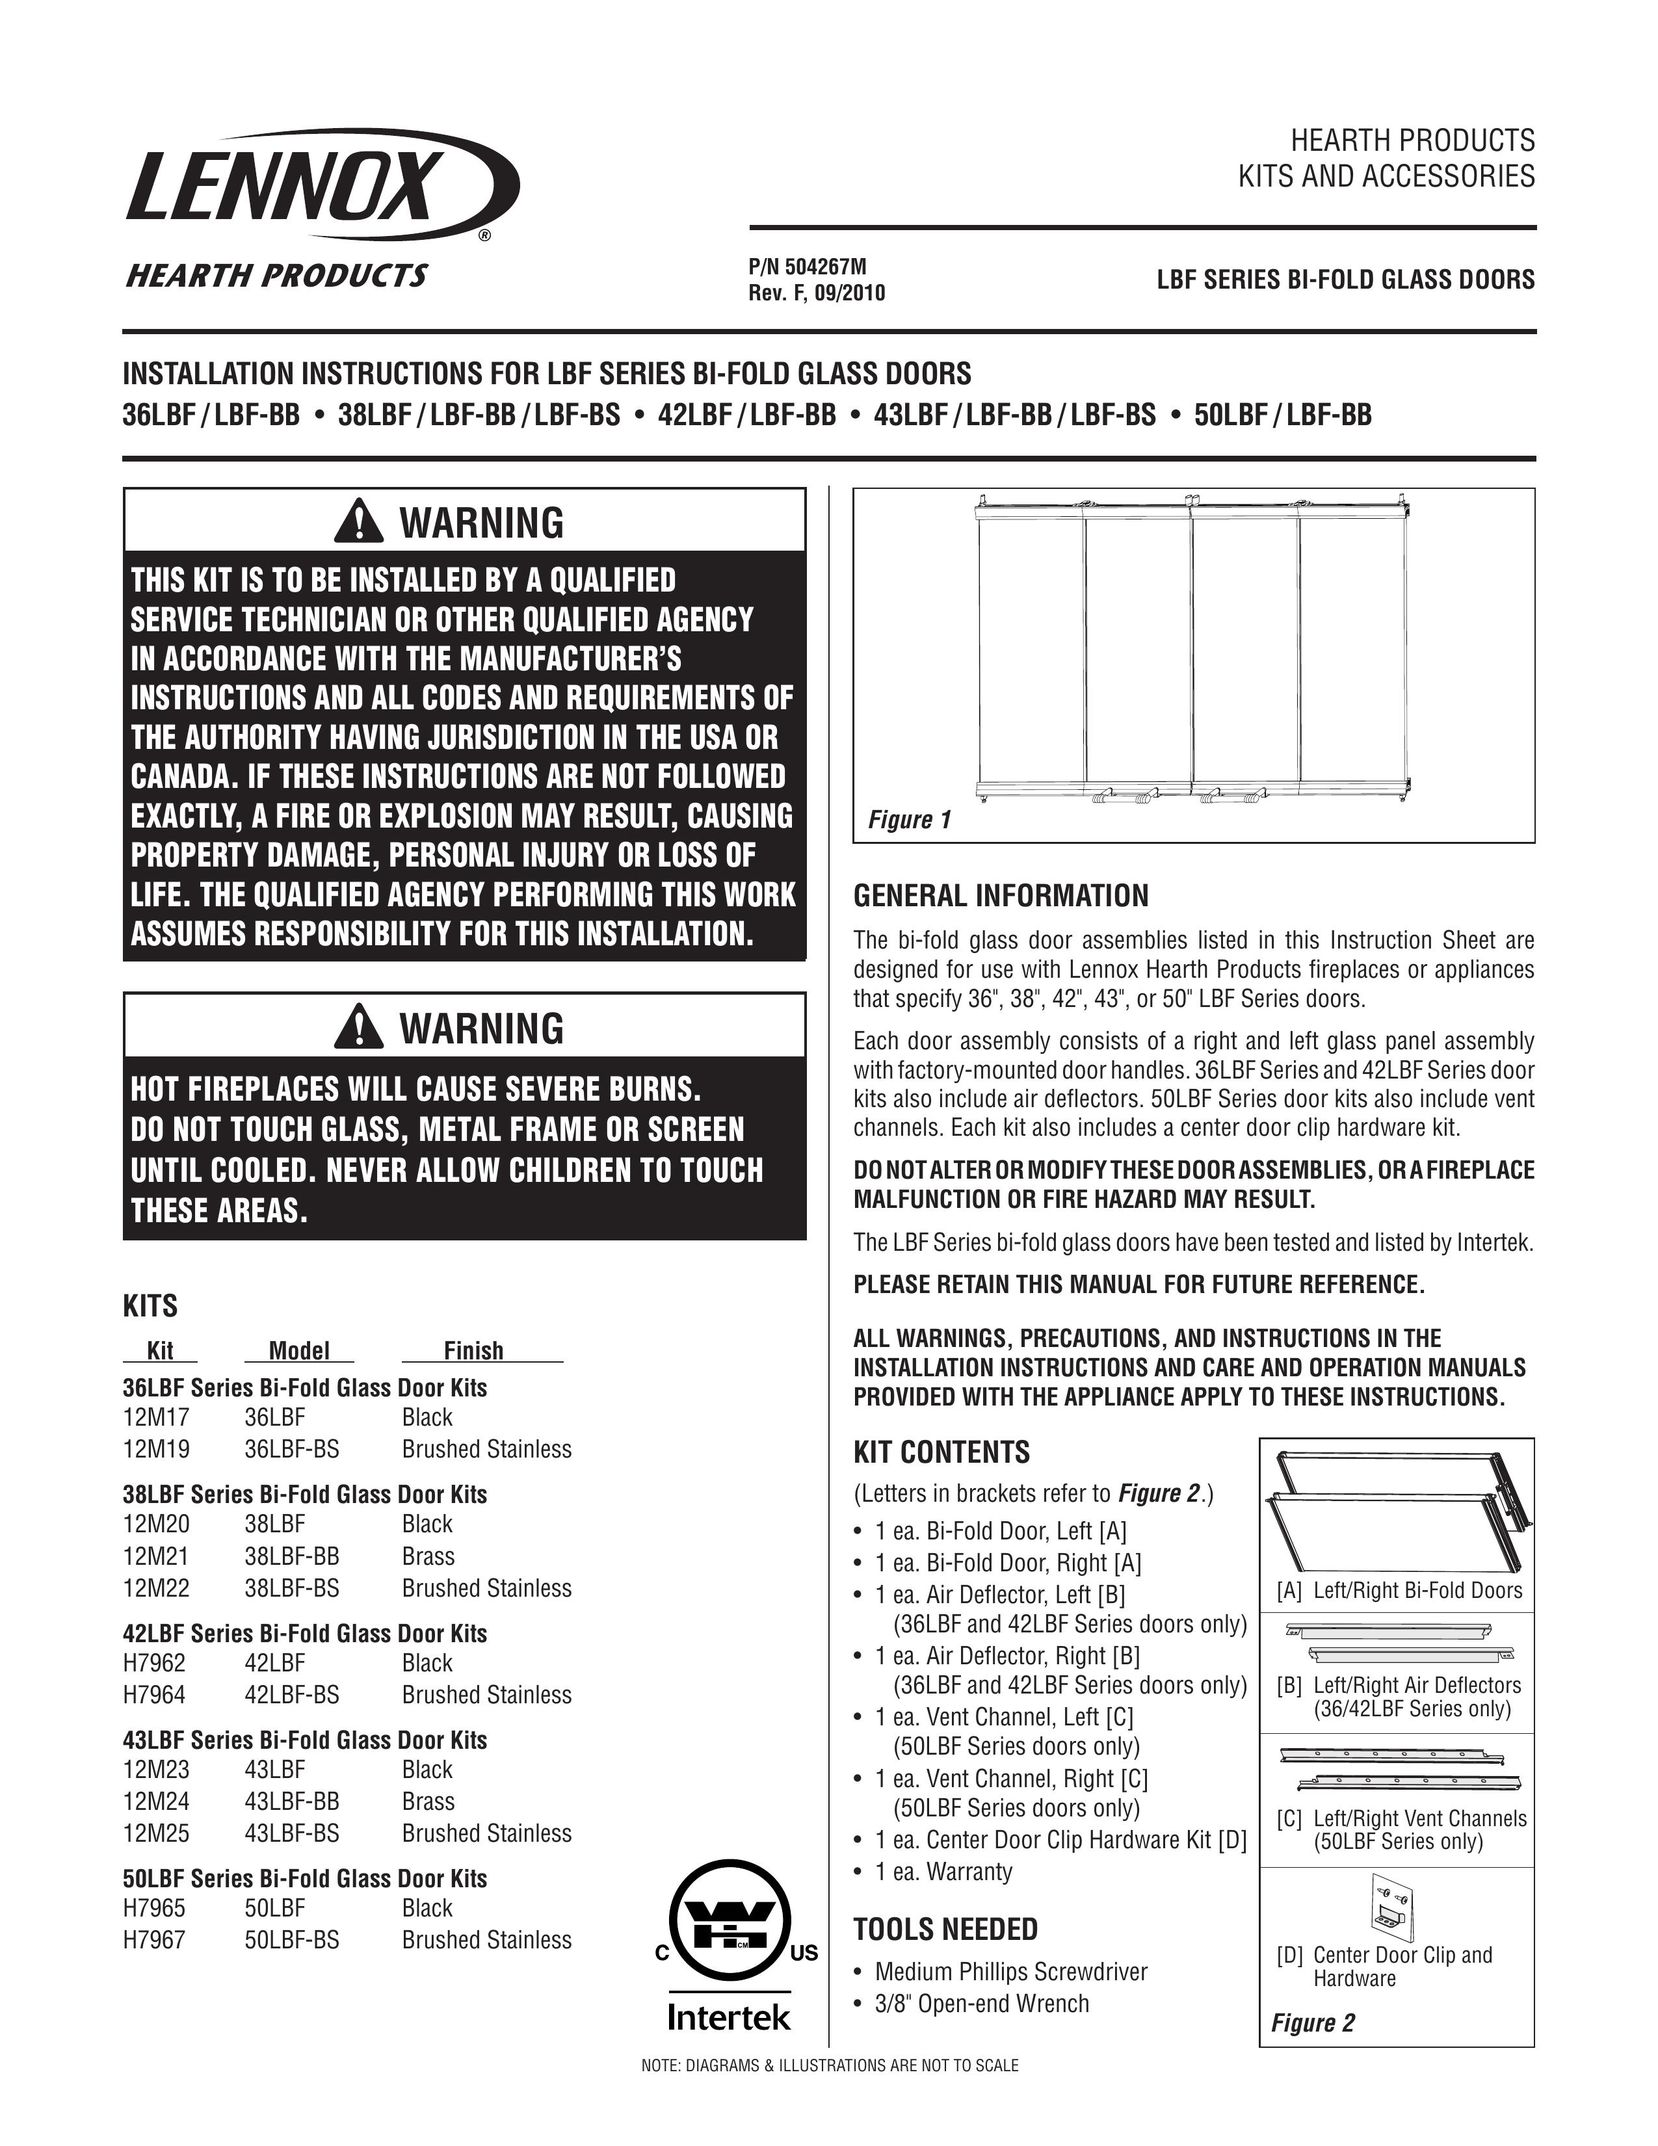 Lennox Hearth 42LBF Door User Manual